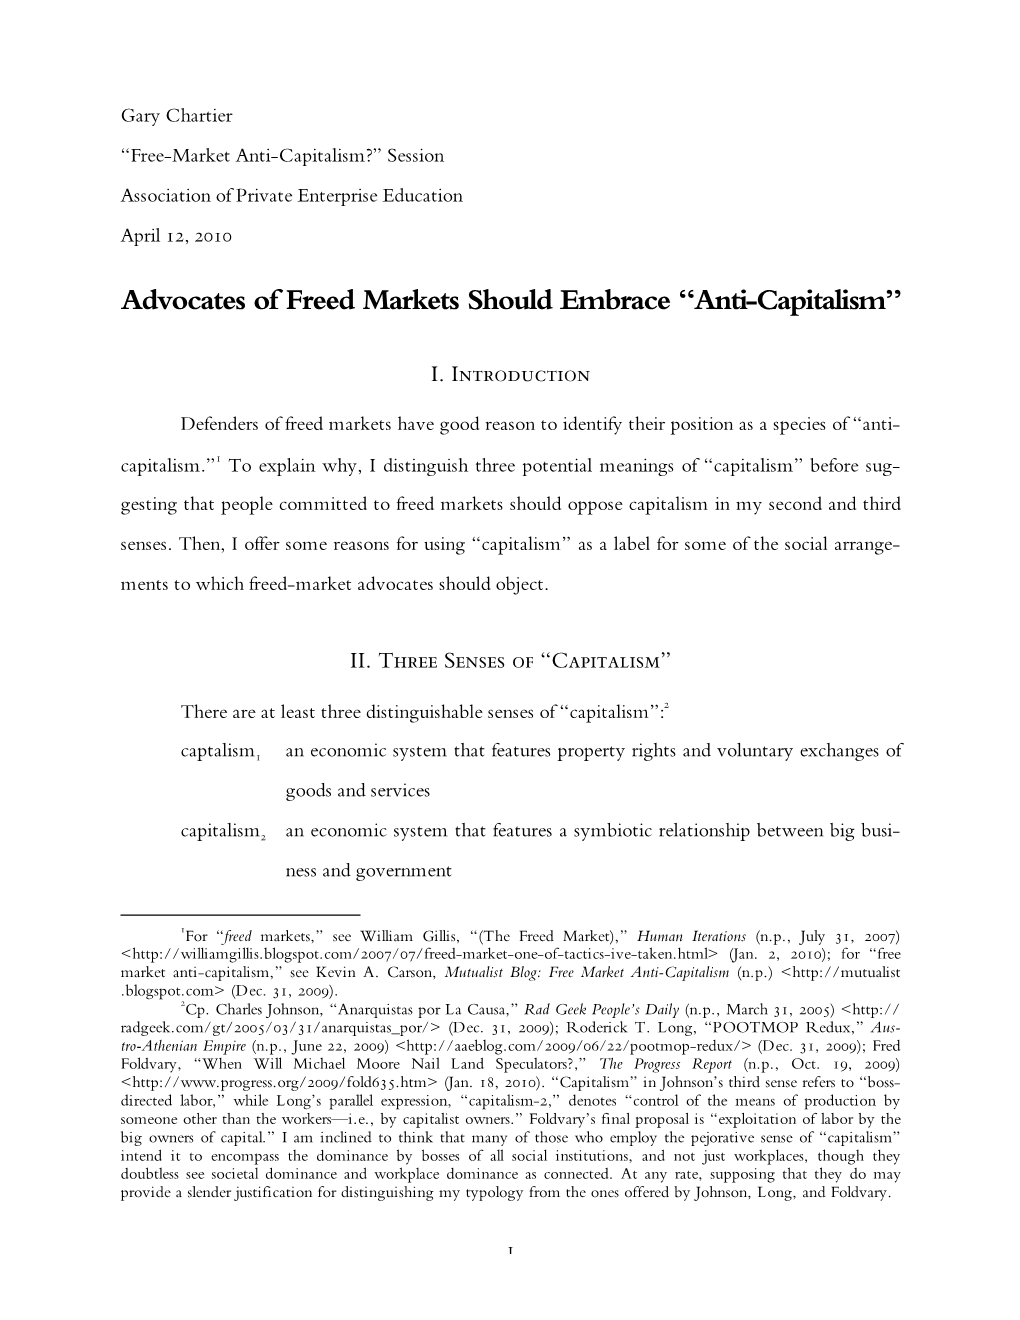 Anti-Capitalism?” Session Association of Private Enterprise Education April 12, 2010